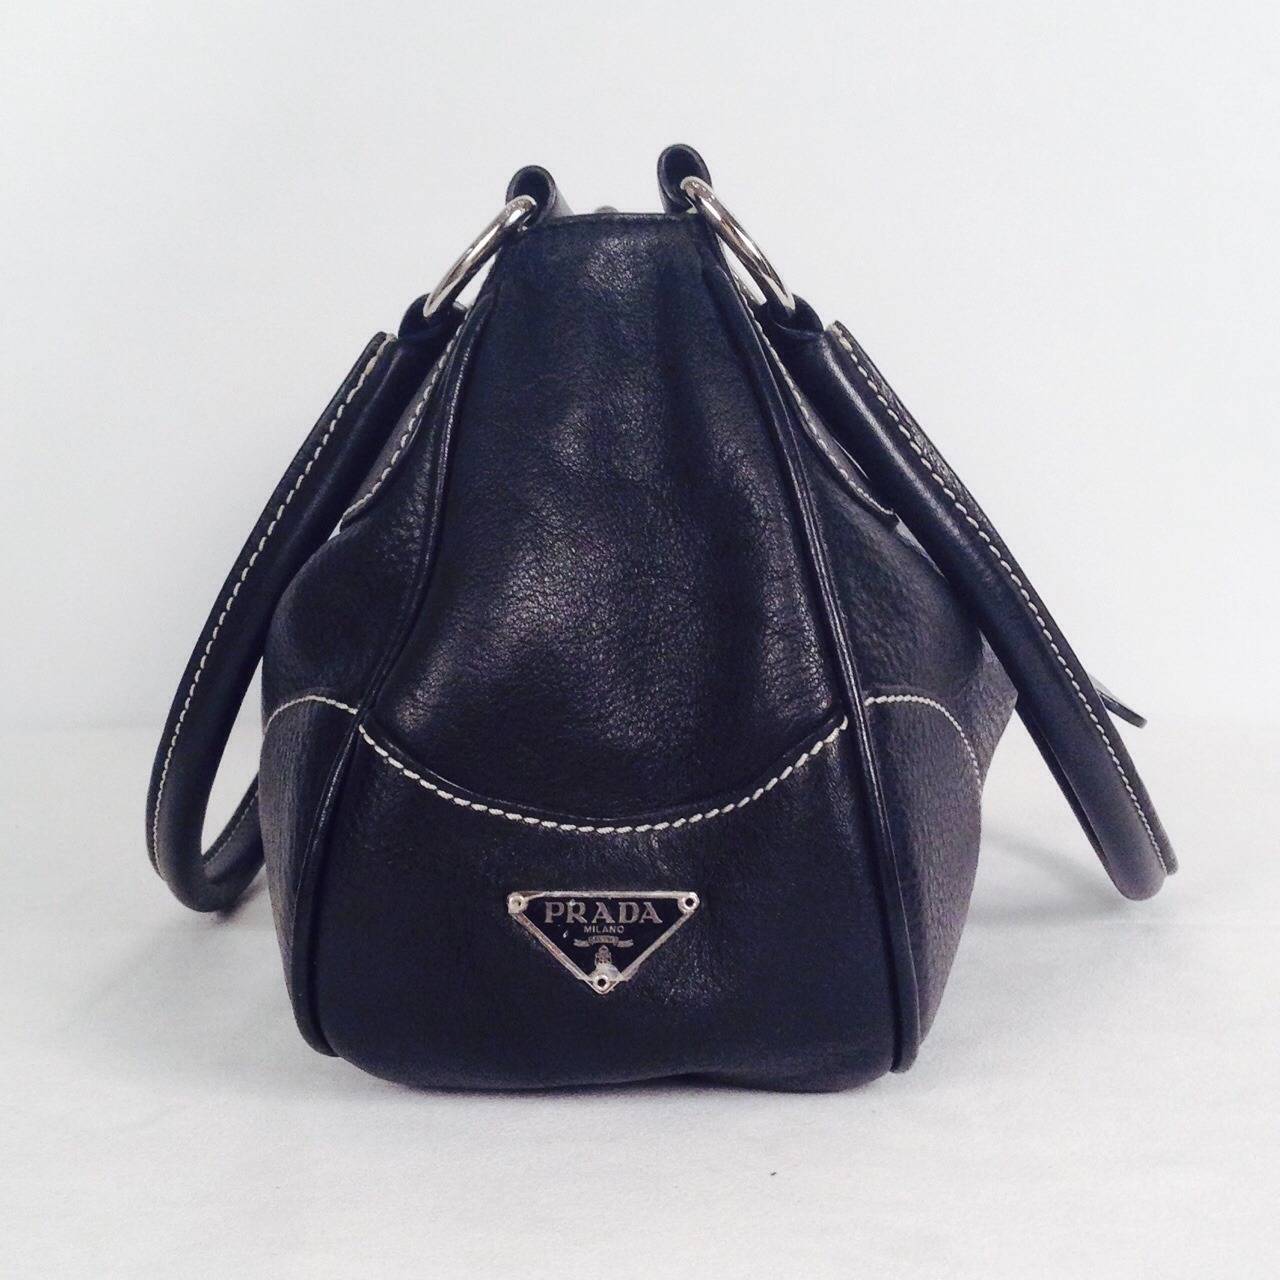 Prada Daino Box Nero Shoulder Handbag In Excellent Condition For Sale In Palm Beach, FL